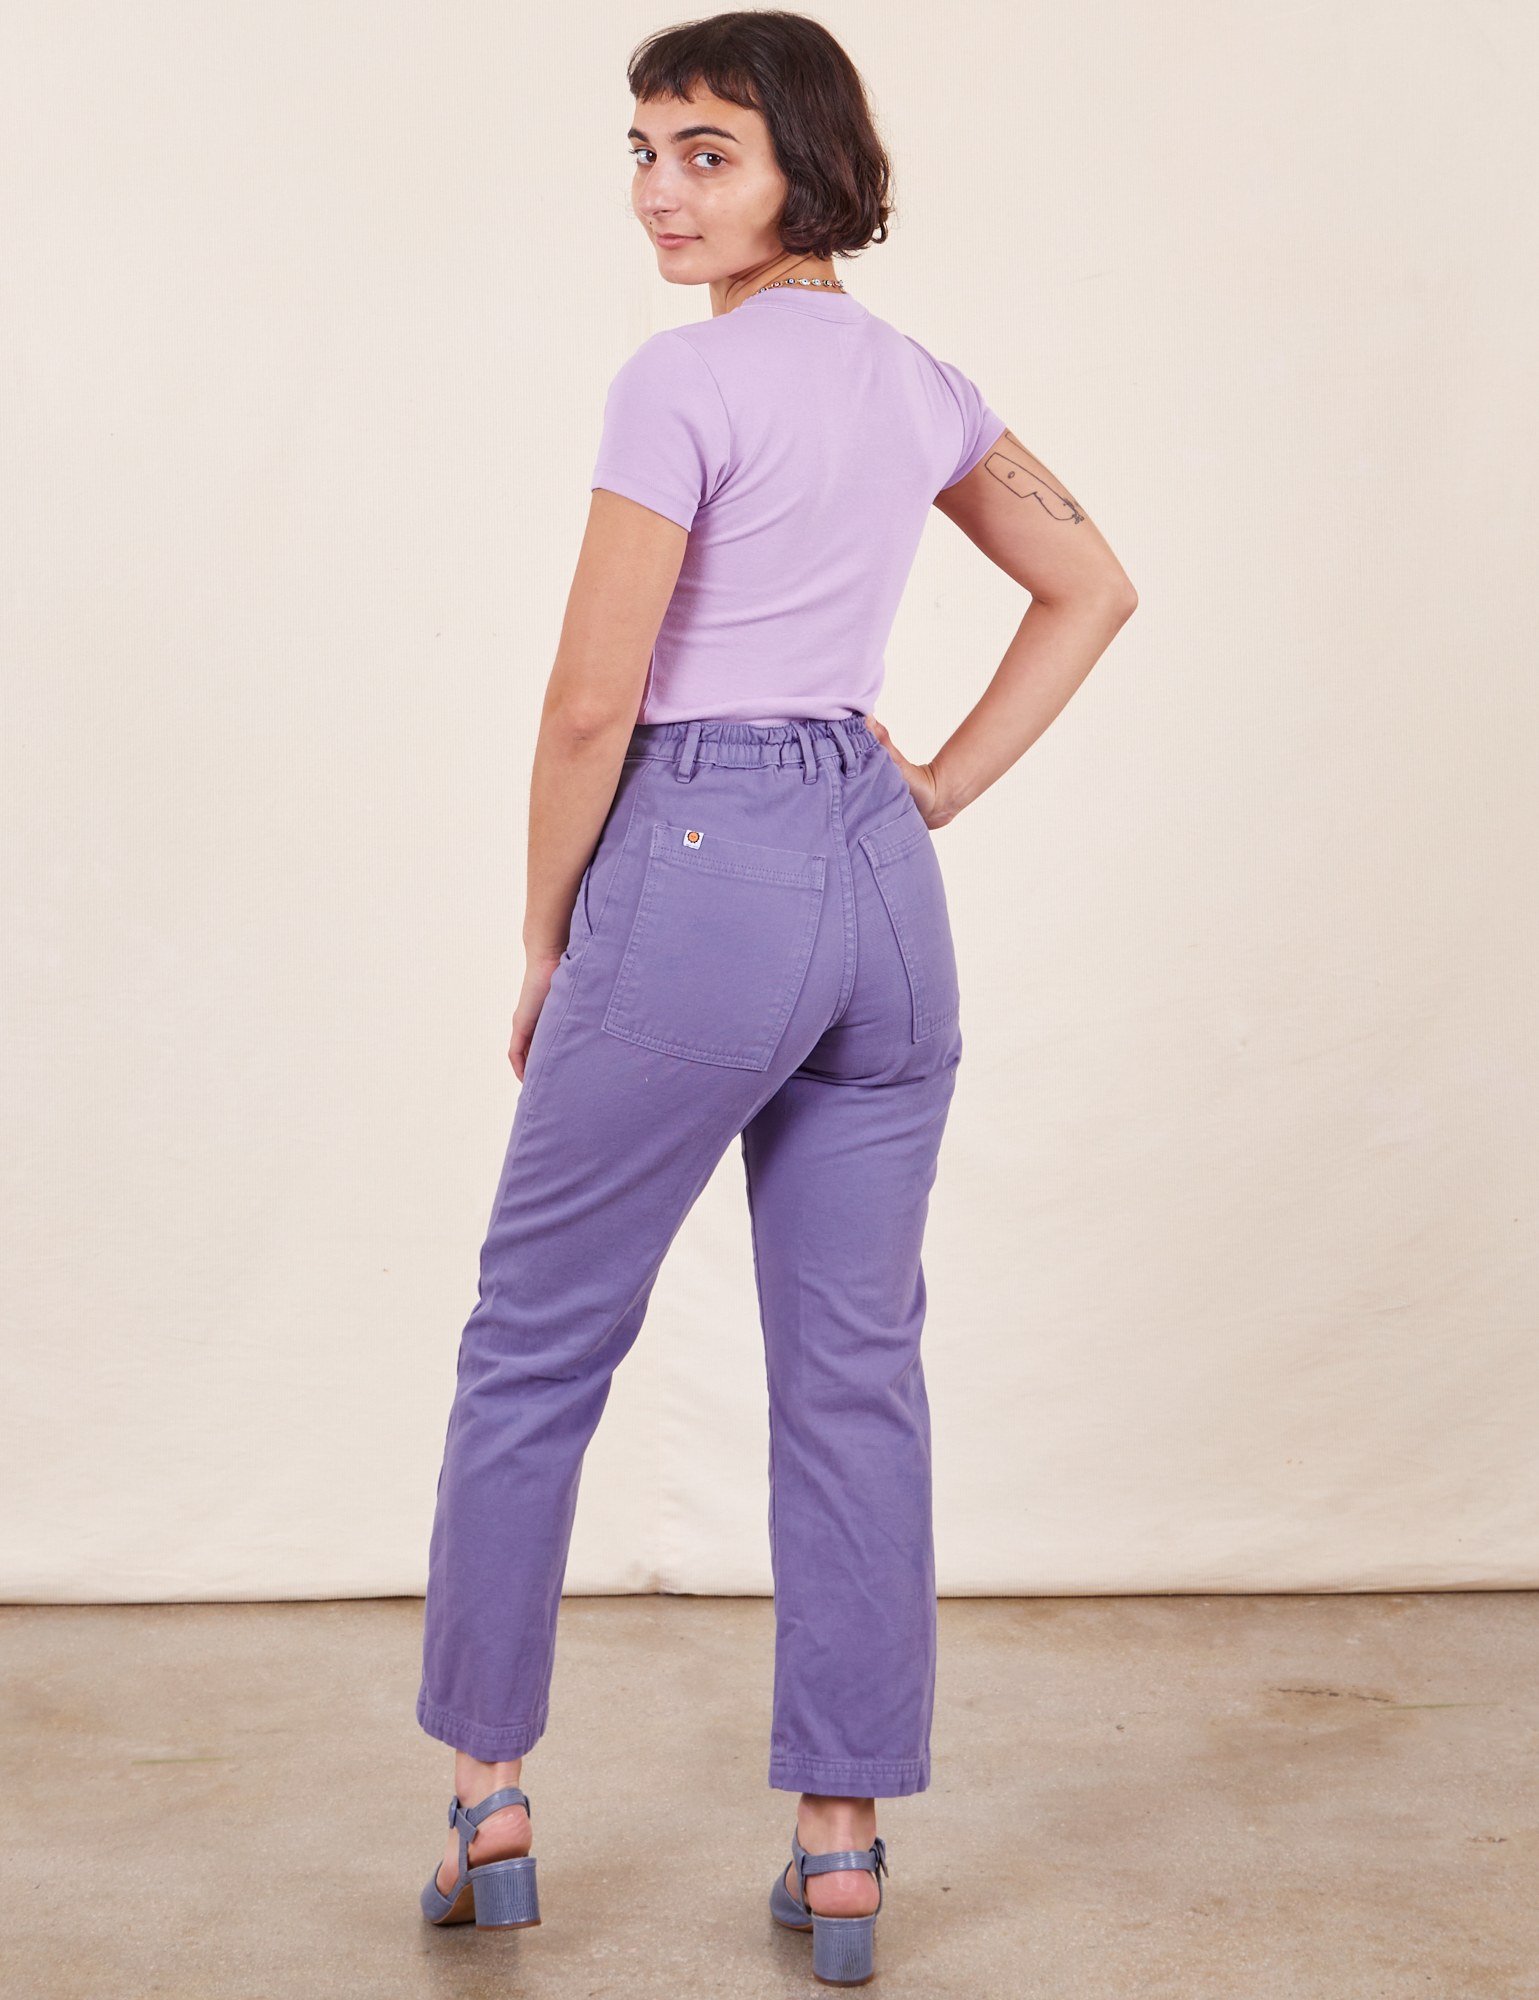 Work Pants in Faded Grape back view on Soraya wearing lilac purple Baby Tee